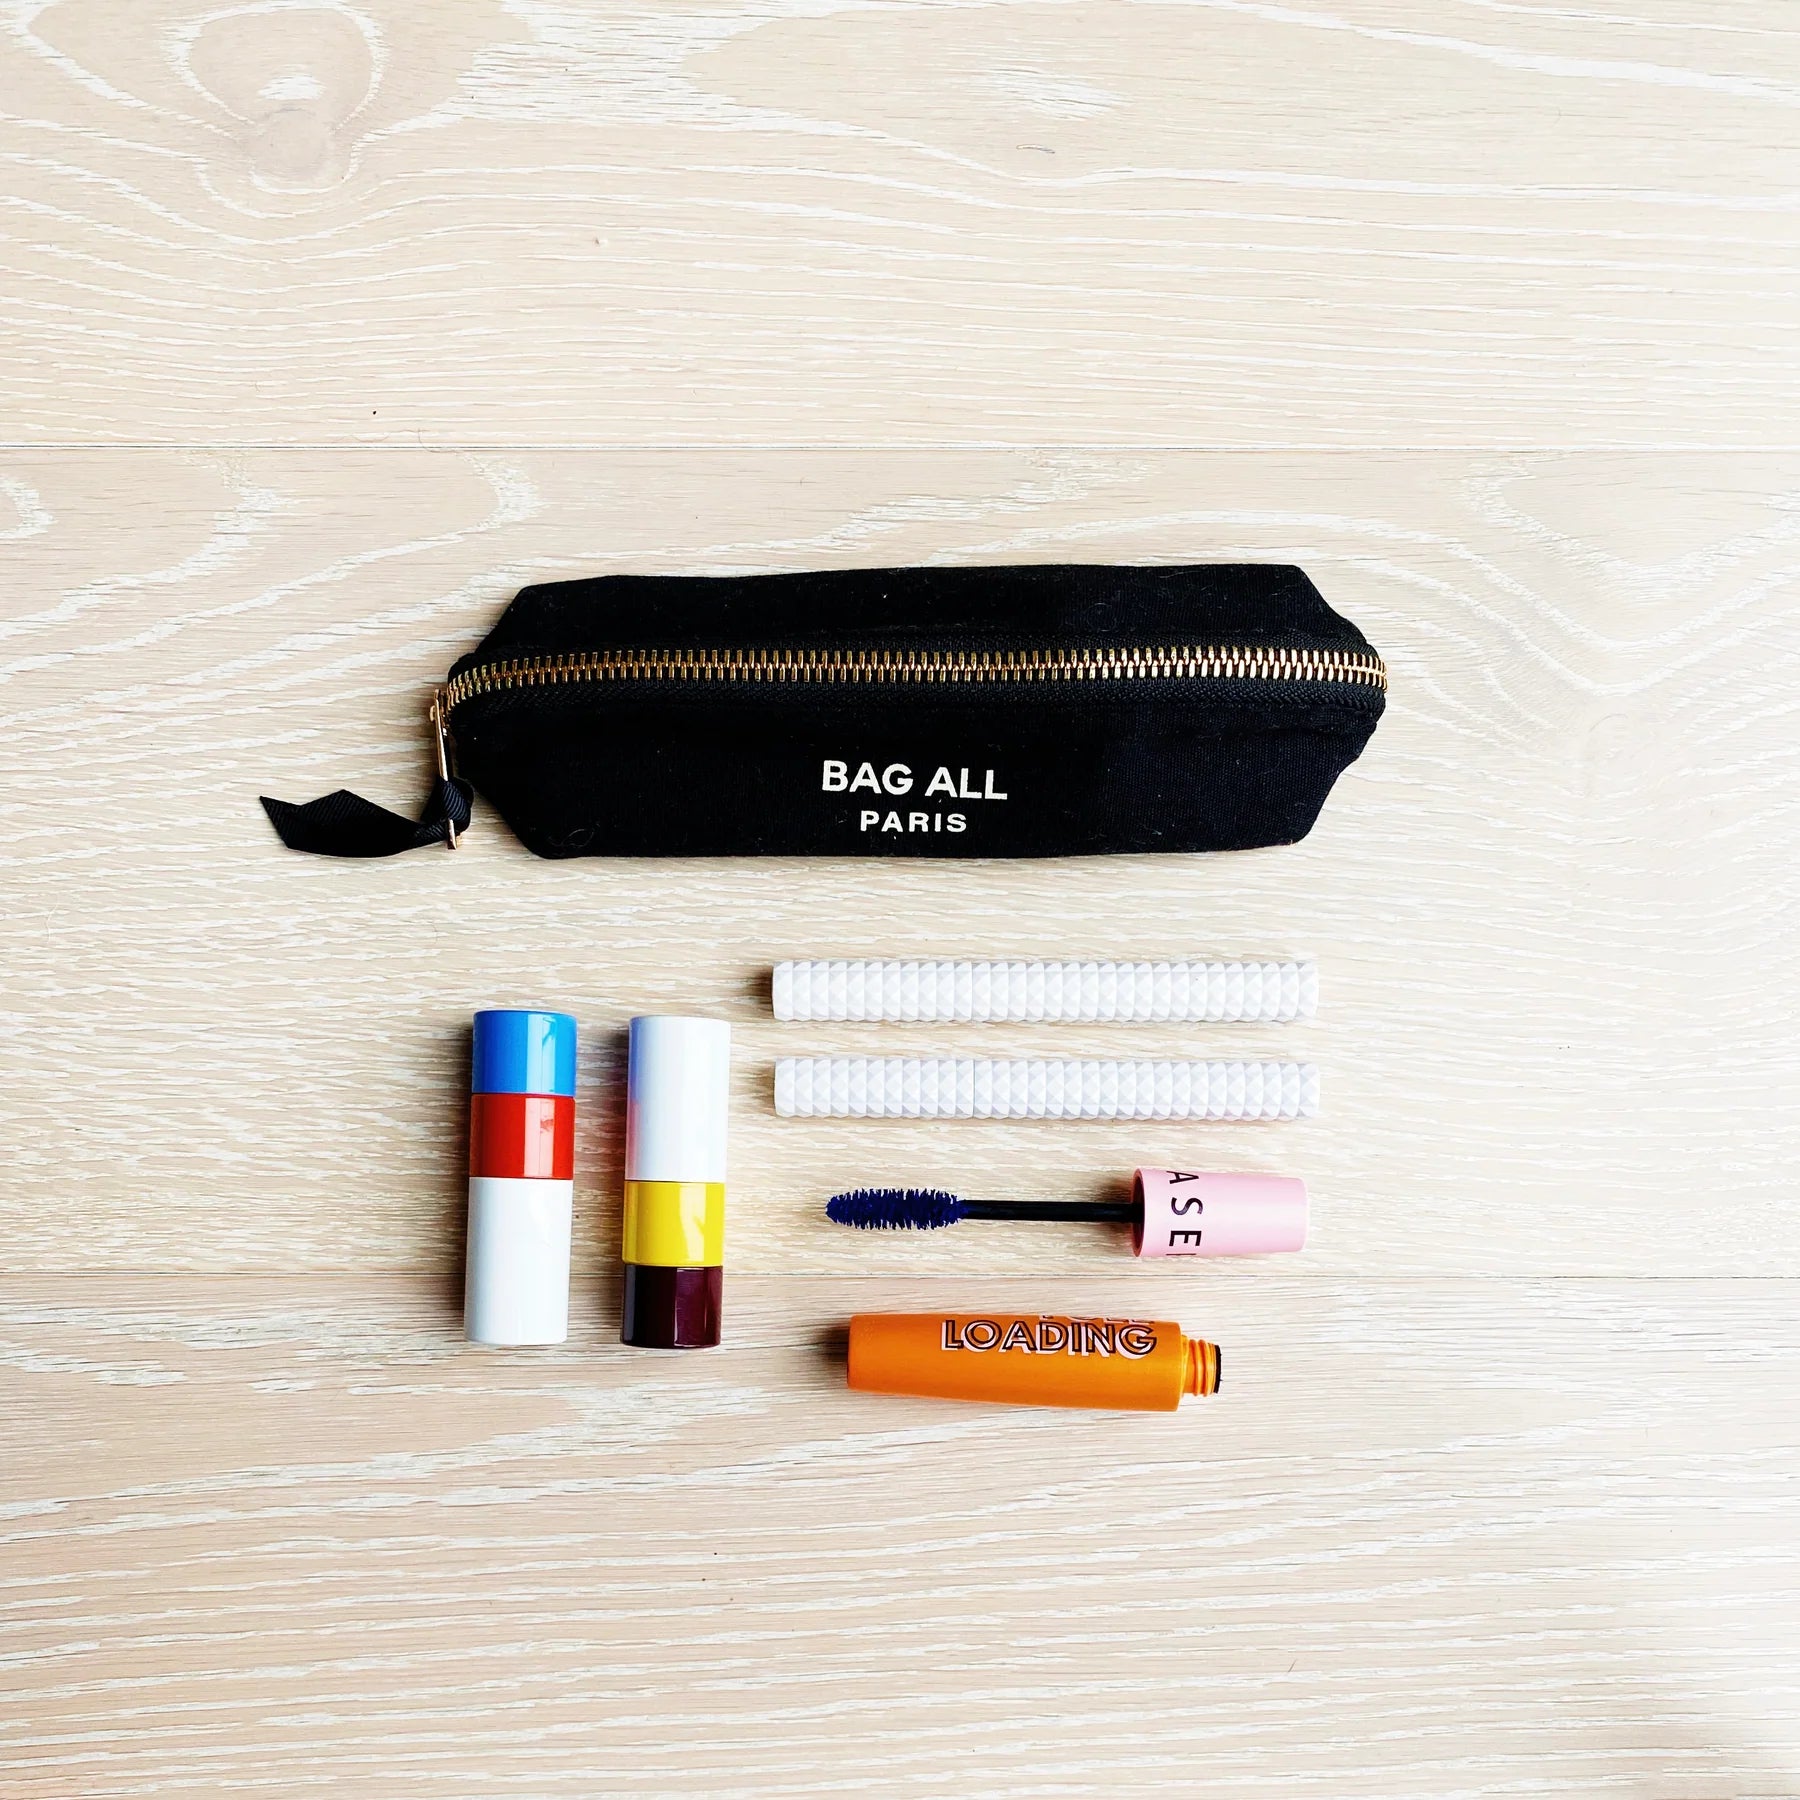 Bag-all's Small Makeup Bag - A Compact Essential!